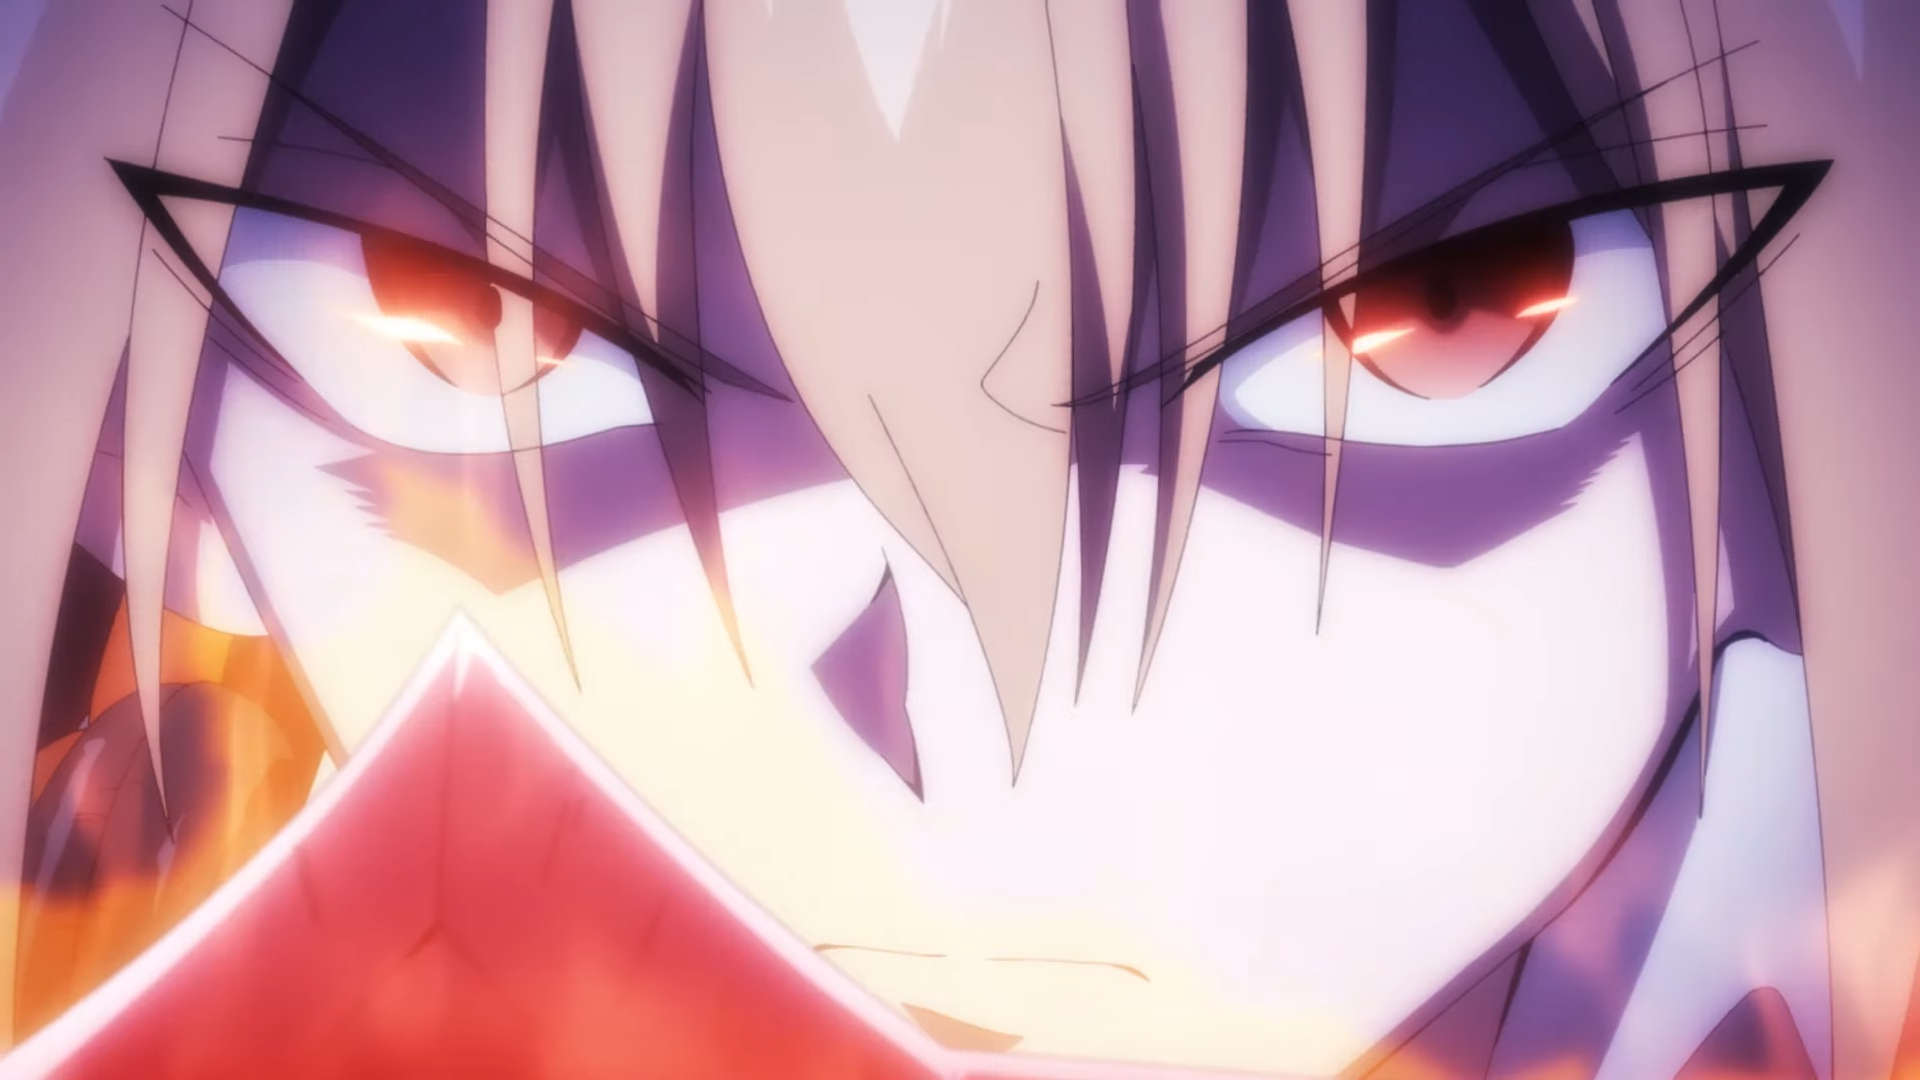 Shaman King: Flowers Anime Reveals Visuals!, Anime News